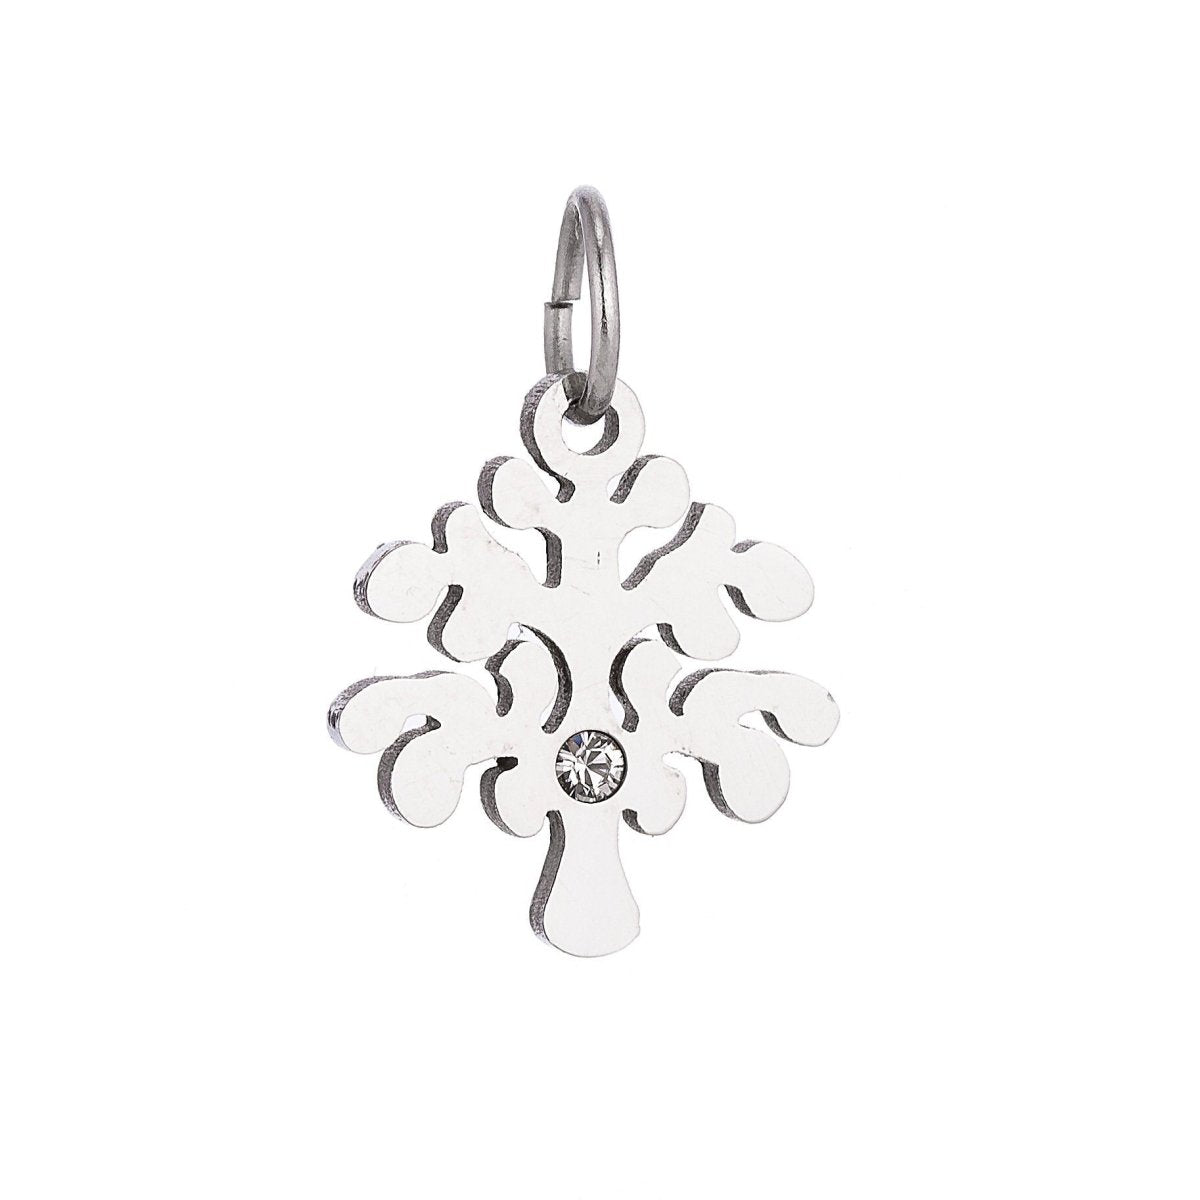 18k Gold Fill Minimalist Dainty Tree of Life w/ Cubic Zirconia Bracelet Charm Necklace Pendant Hoop Earring Findings for Jewelry Making E-633 - DLUXCA